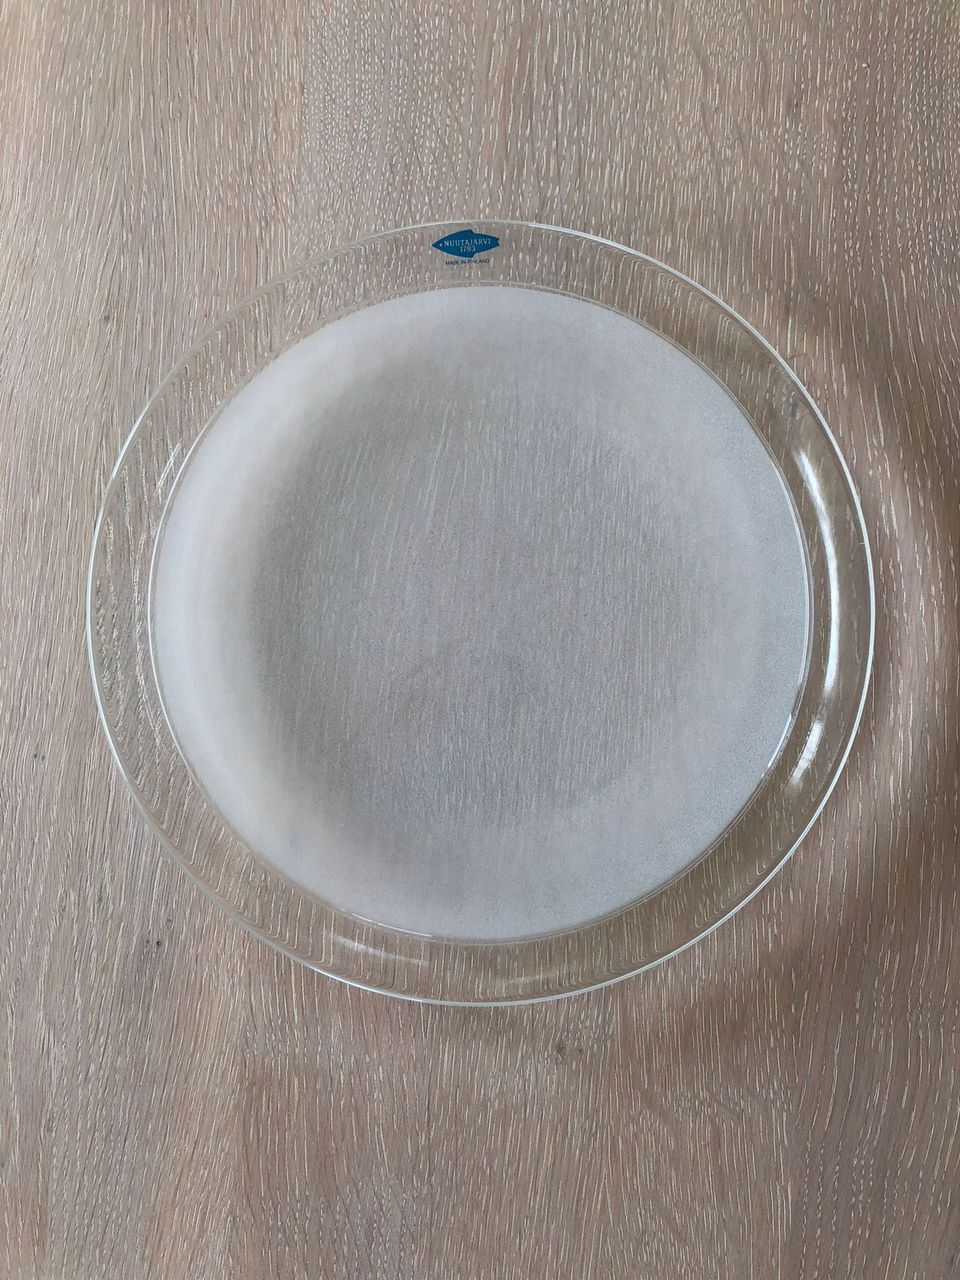 NUUTAJÄRVI Lumikuru-sarjan kristallilasiset lautaset (8 kpl)